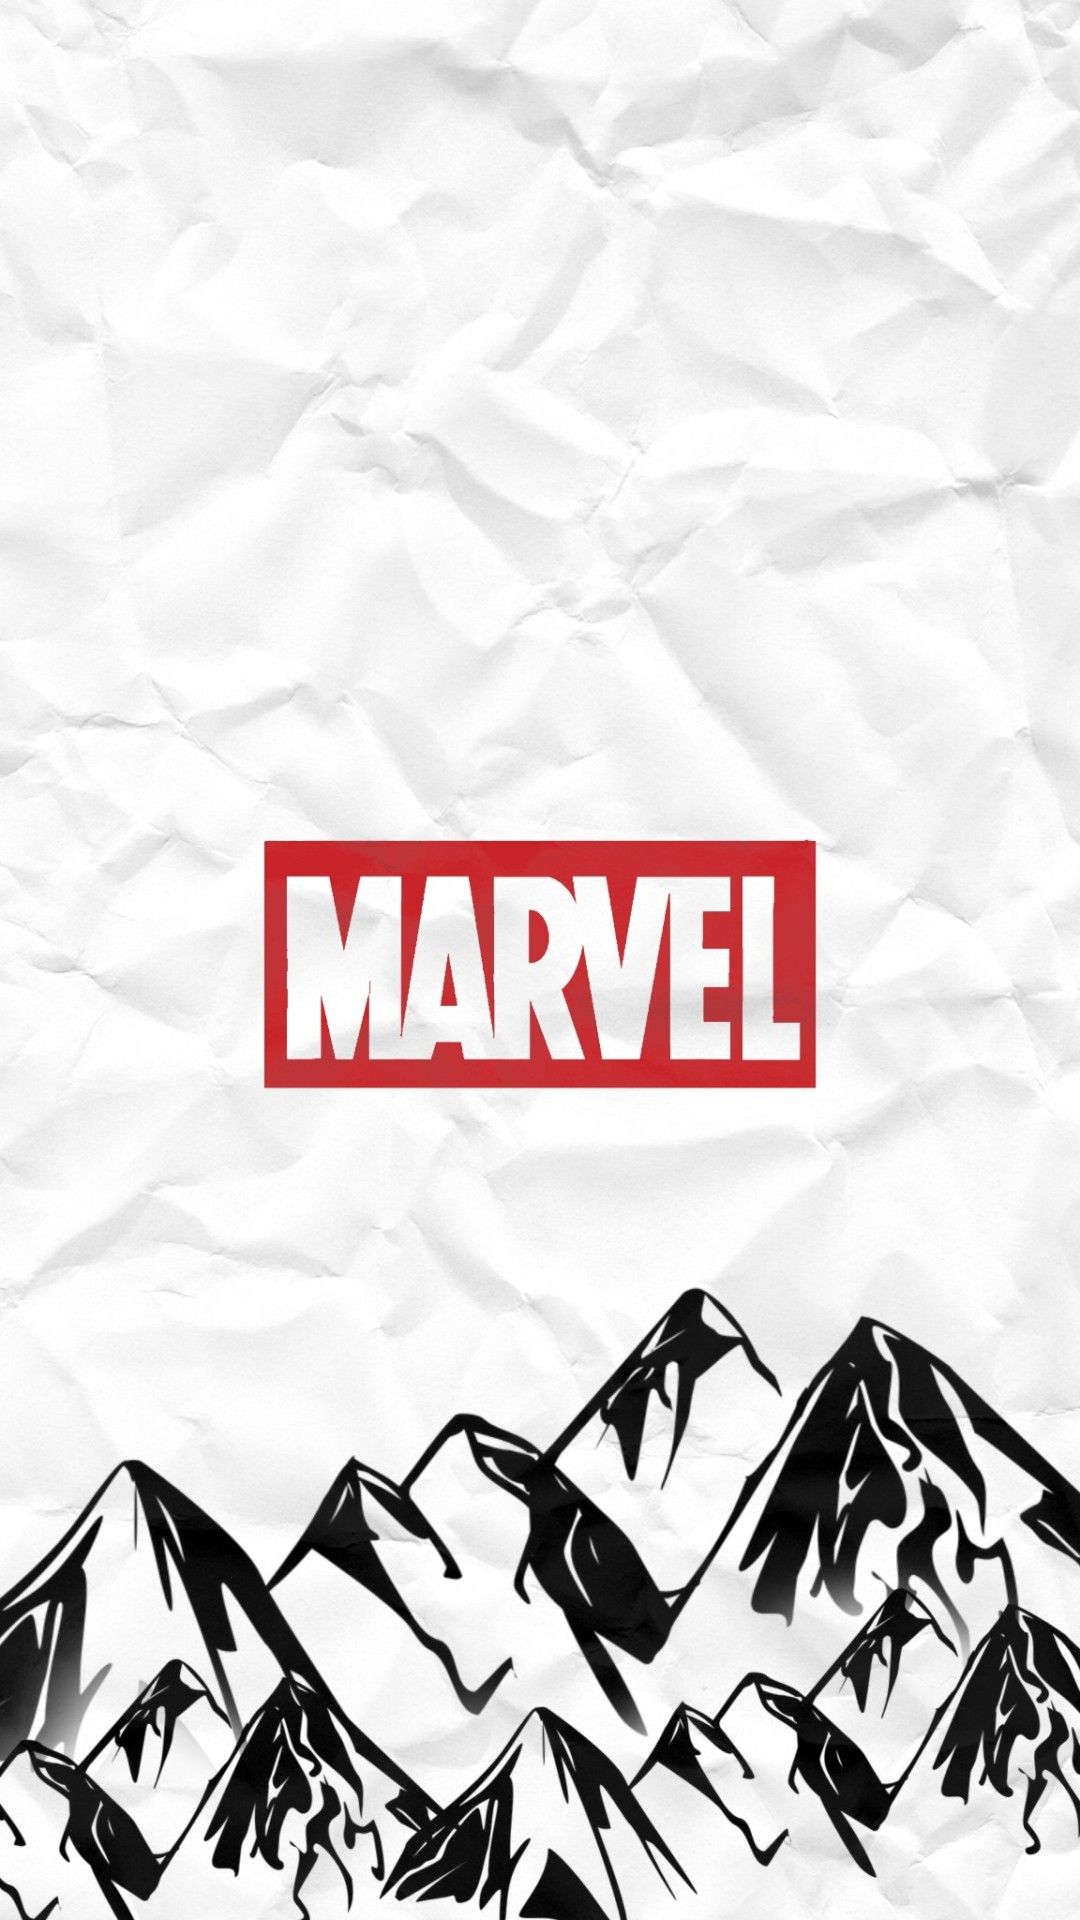 Iphone wallpaper marvel - photo#20 - Marvel